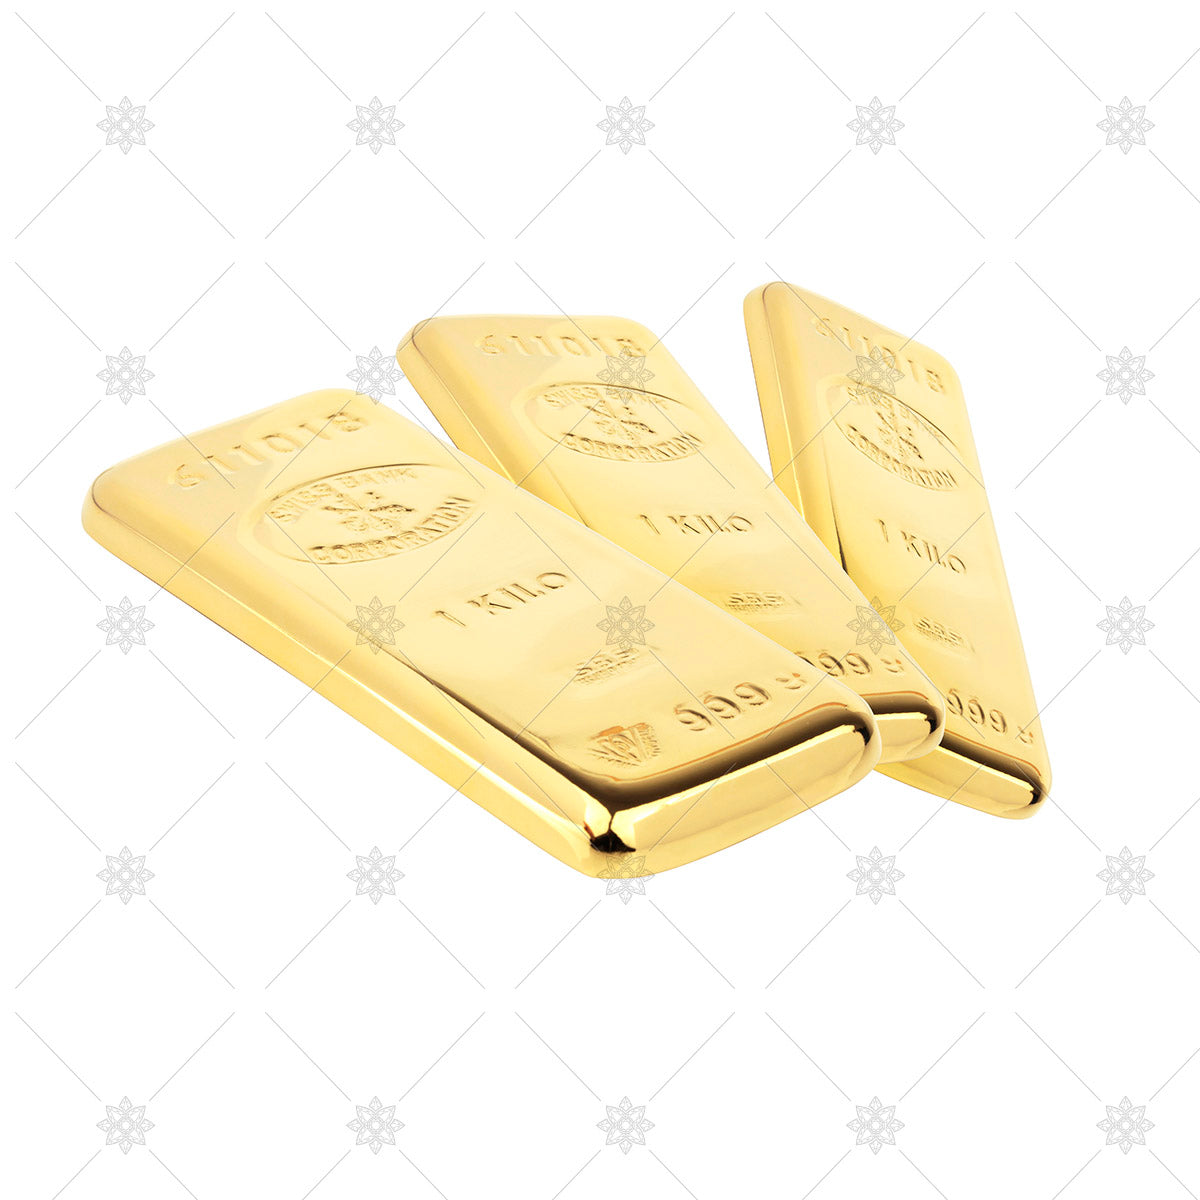 image of gold bullion bars